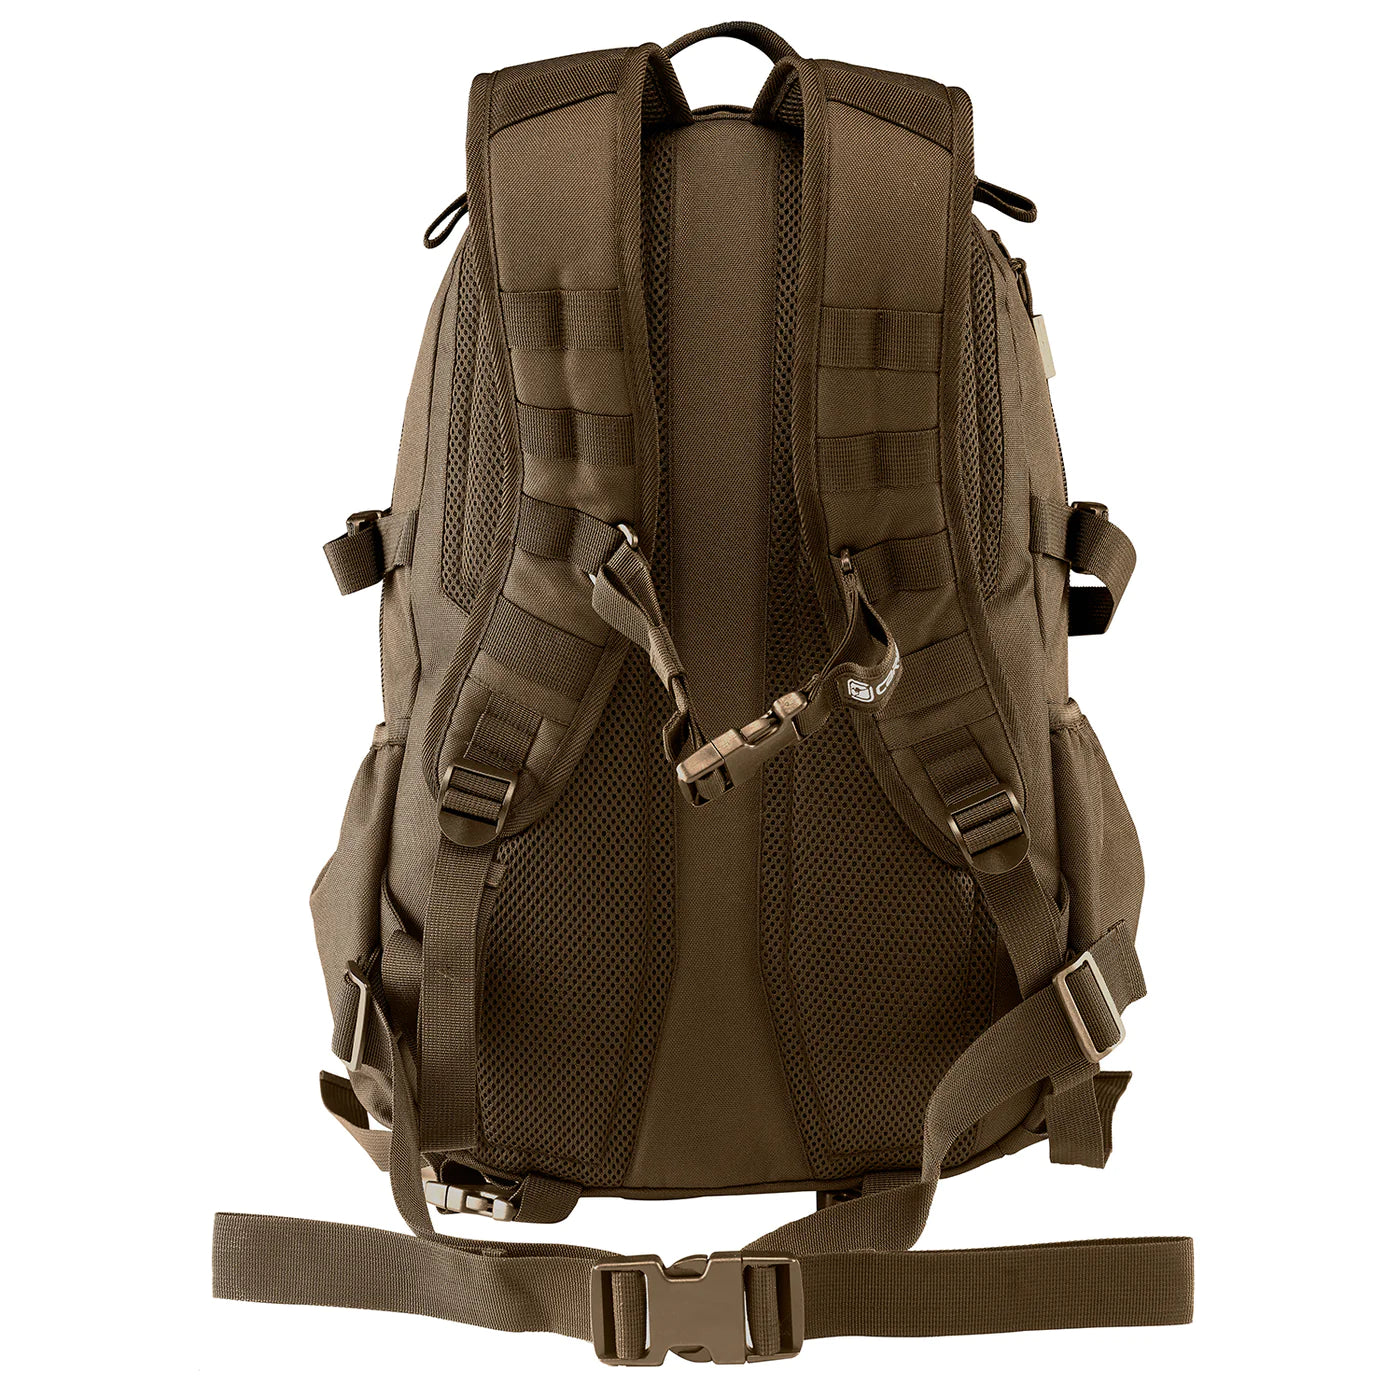 Caribee M35 Incursion Backpack